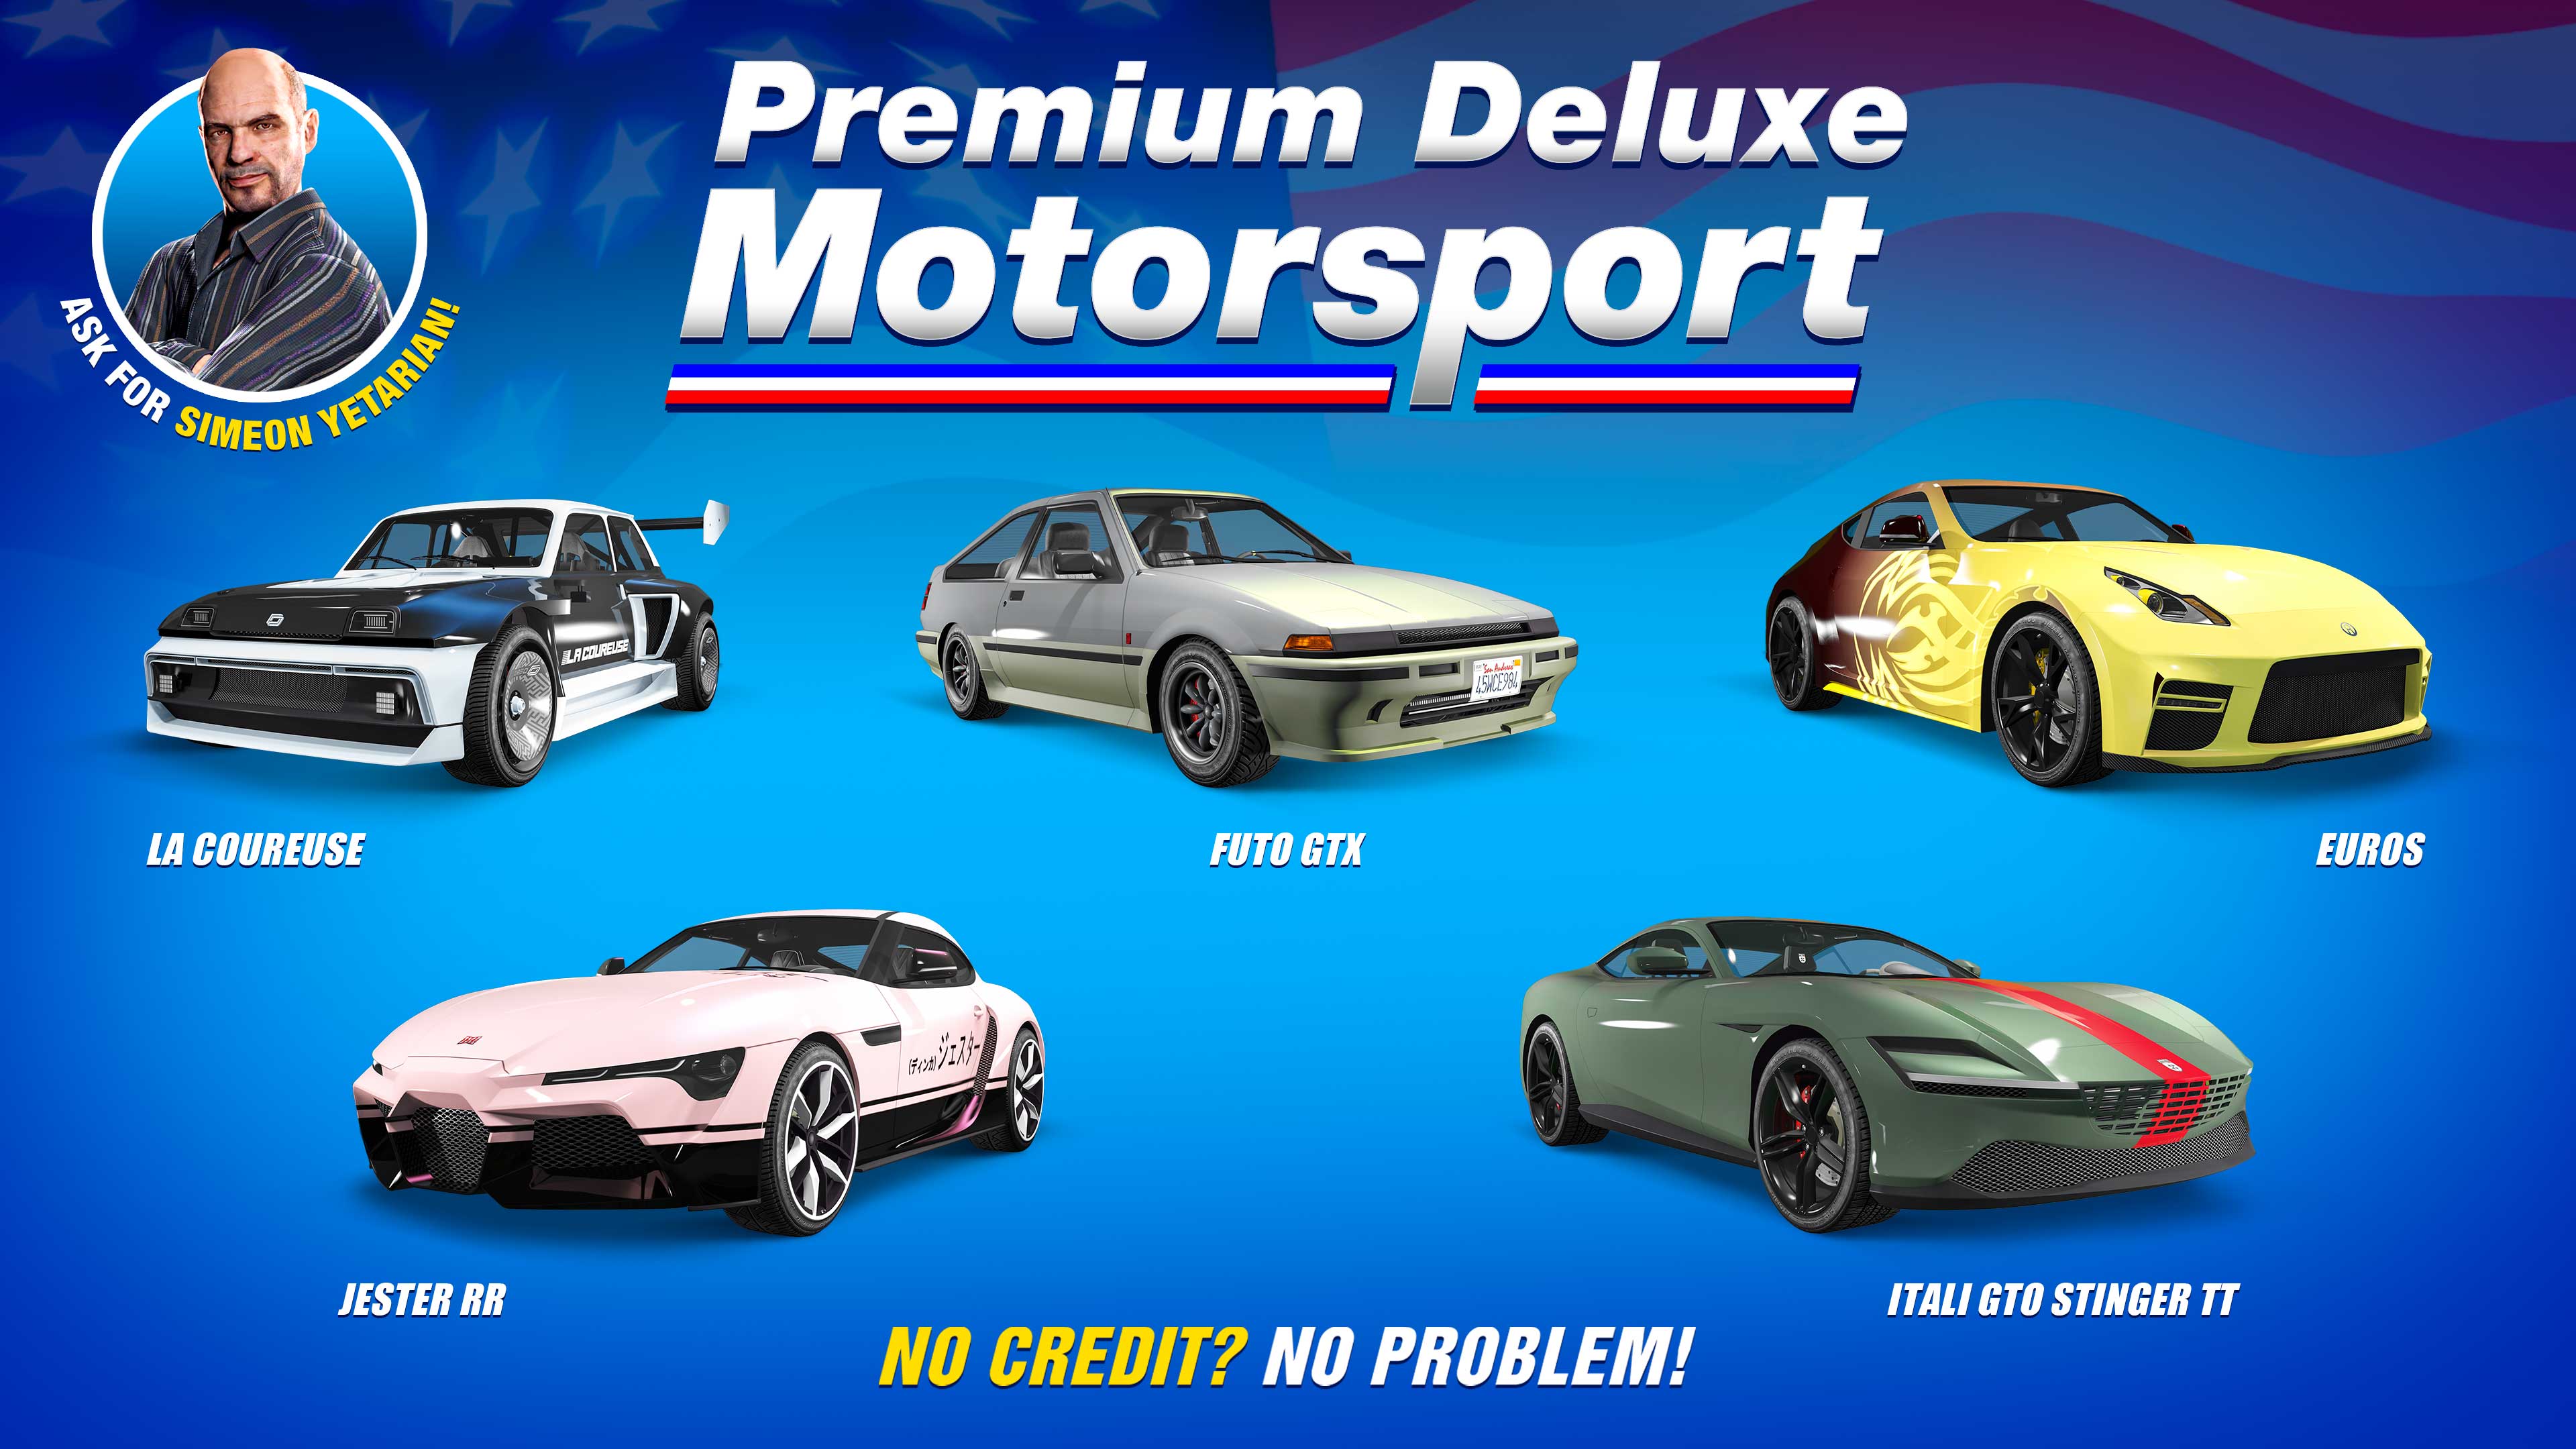 Pôster com cinco veículos da Premium Deluxe Motorspot: Karin Futo GTX, Annis Euros, Dinka Jester RR, Penaud La Coureuse, Grotti Itali GTO Stinger TT.